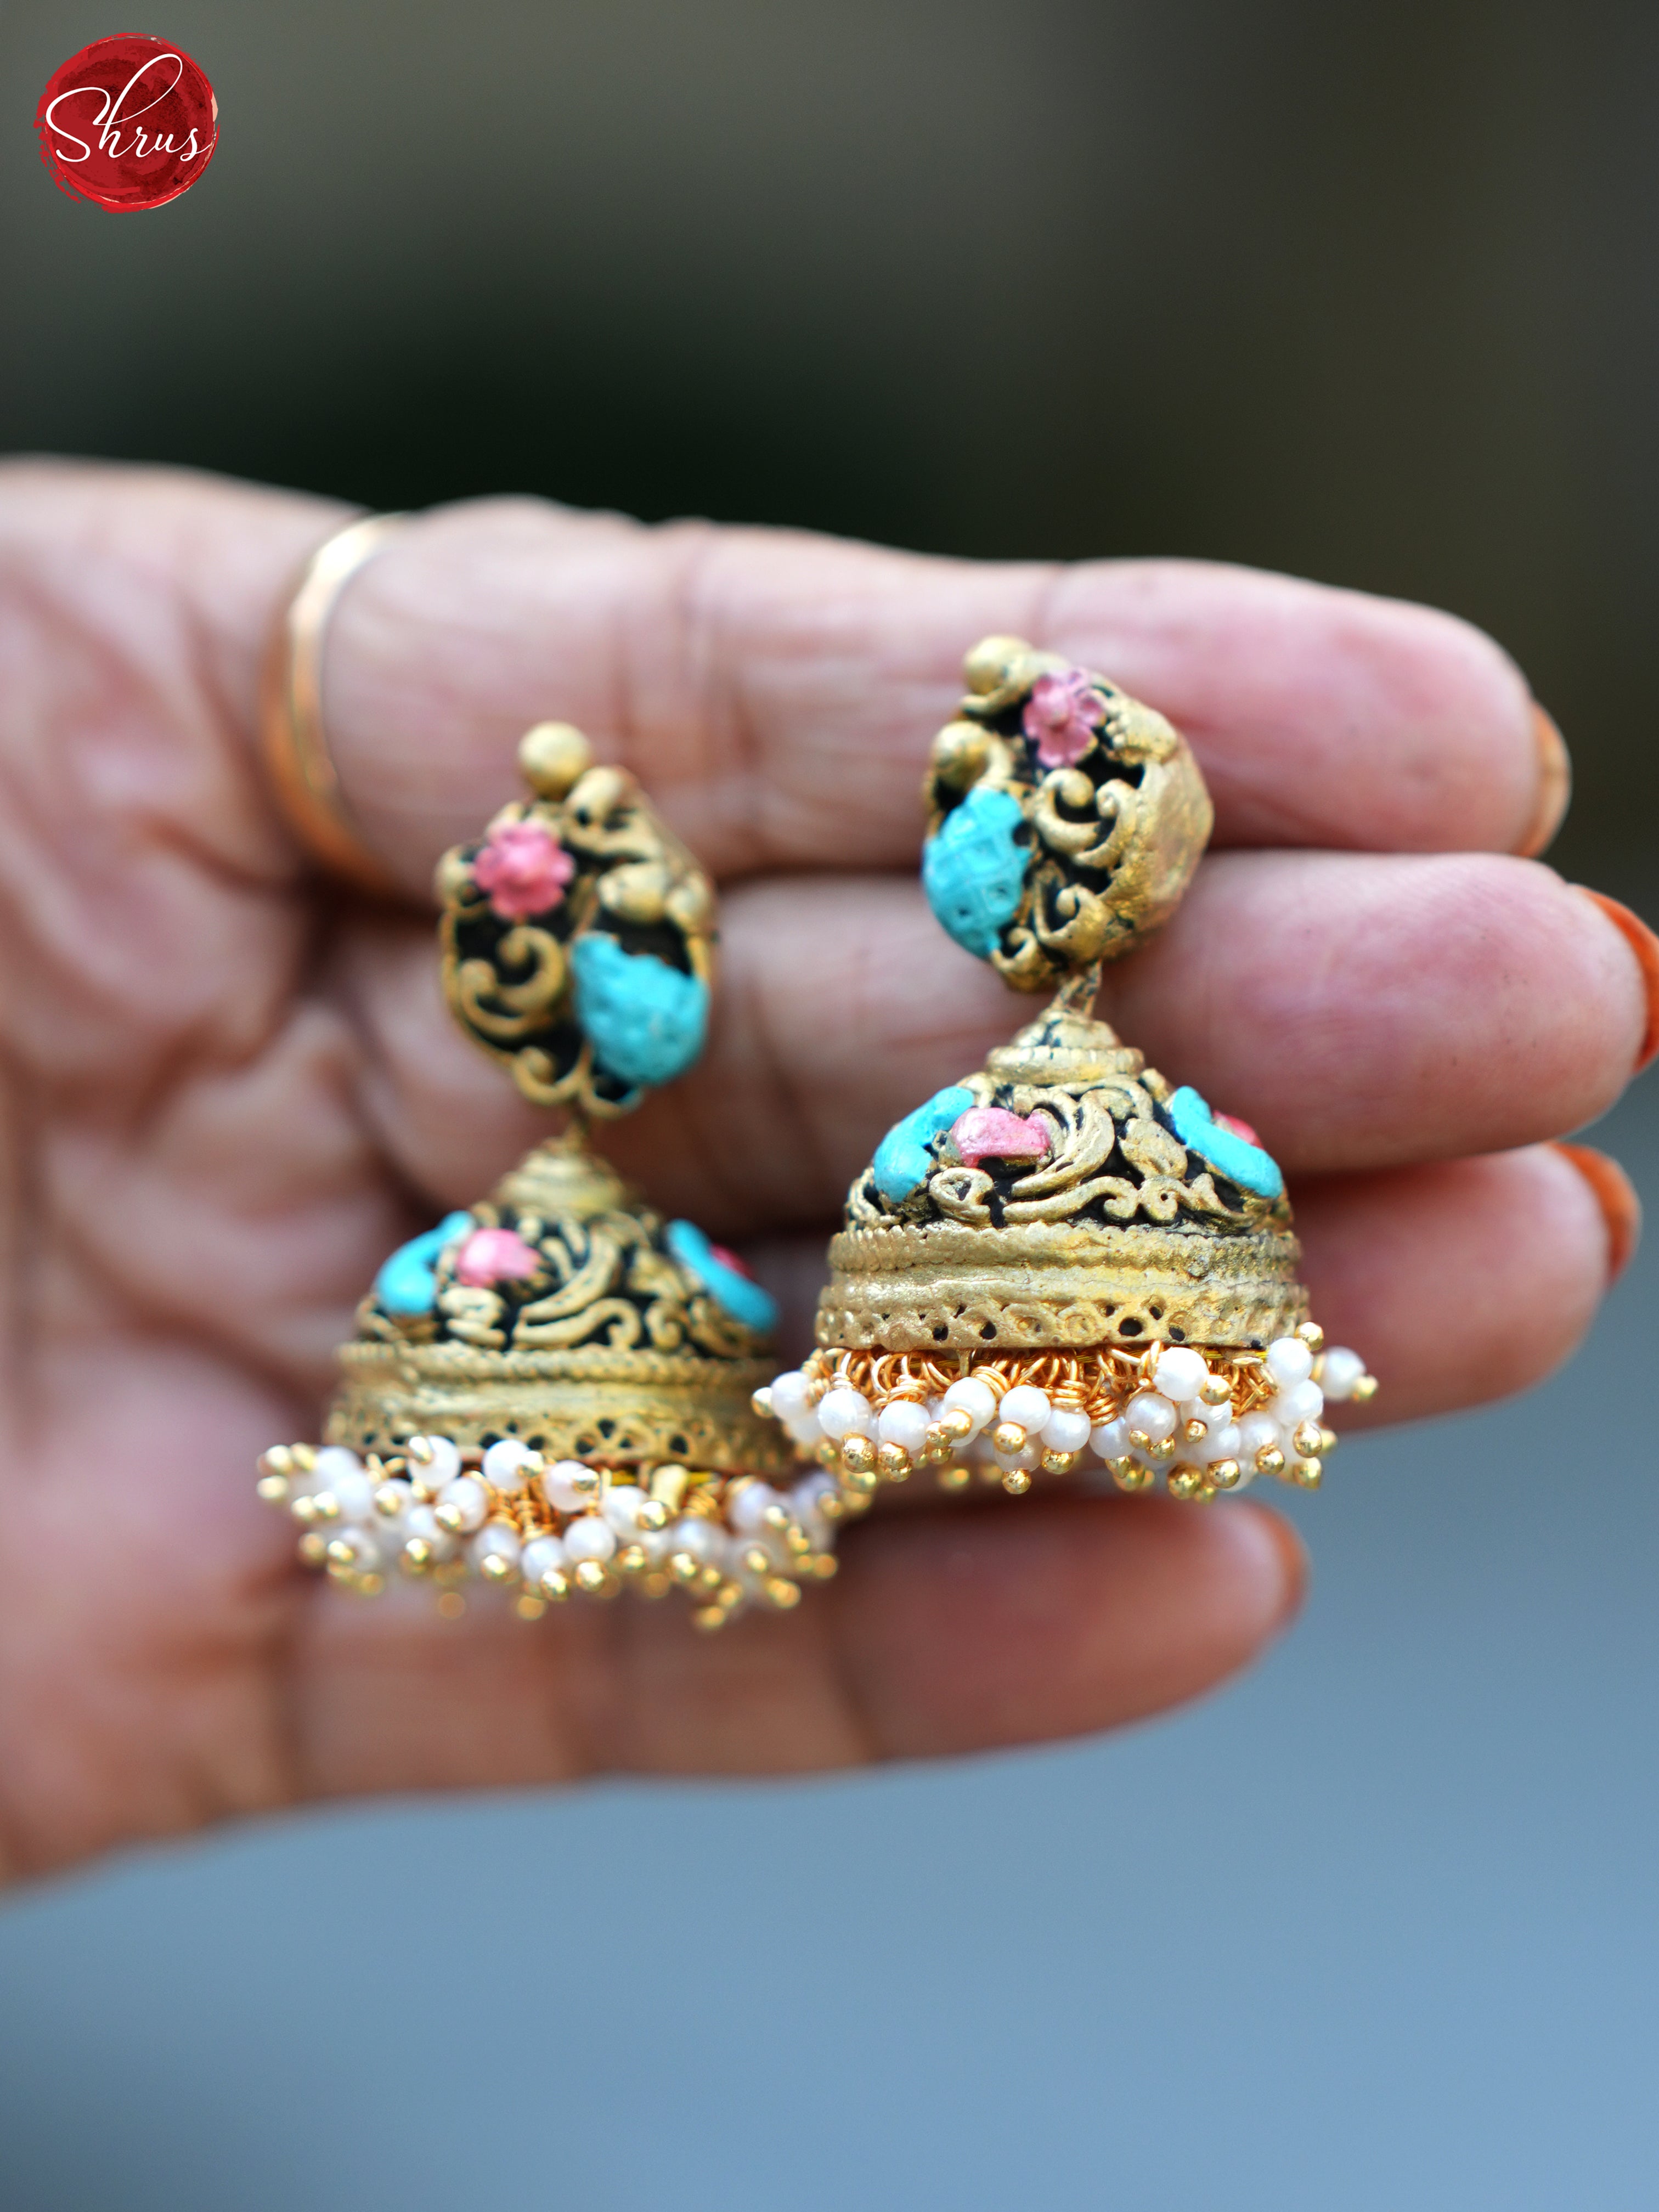 Handcrafted Peacock Terracota Neckalce with lakshmi pendant  - Accessories - Shop on ShrusEternity.com